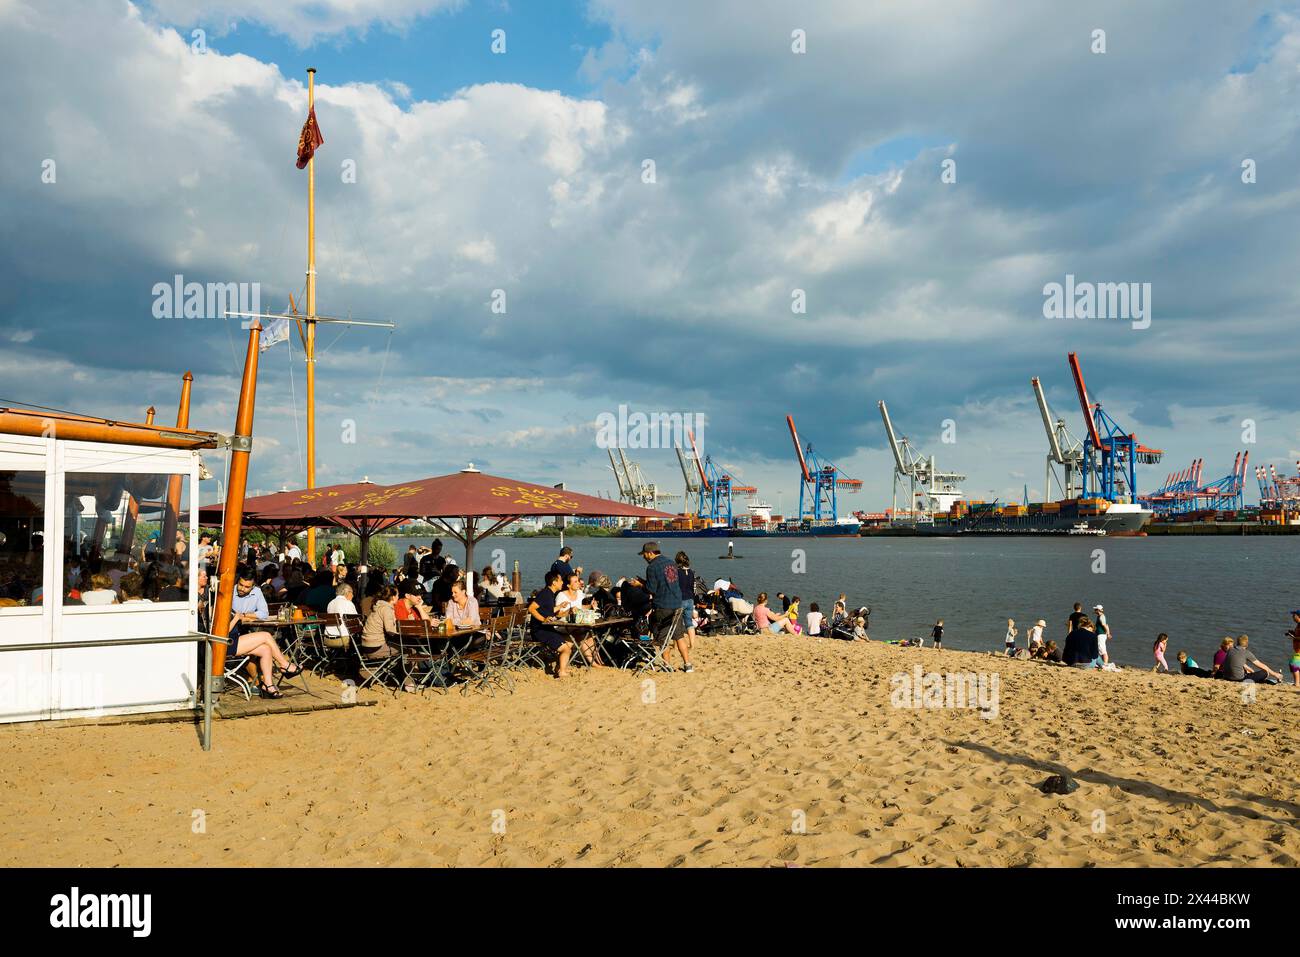 People on the beach, Strandbar Strandperle, Elbe beach, Hamburg harbour in the background, Oevelgoenne, Hamburg, Germany Stock Photo